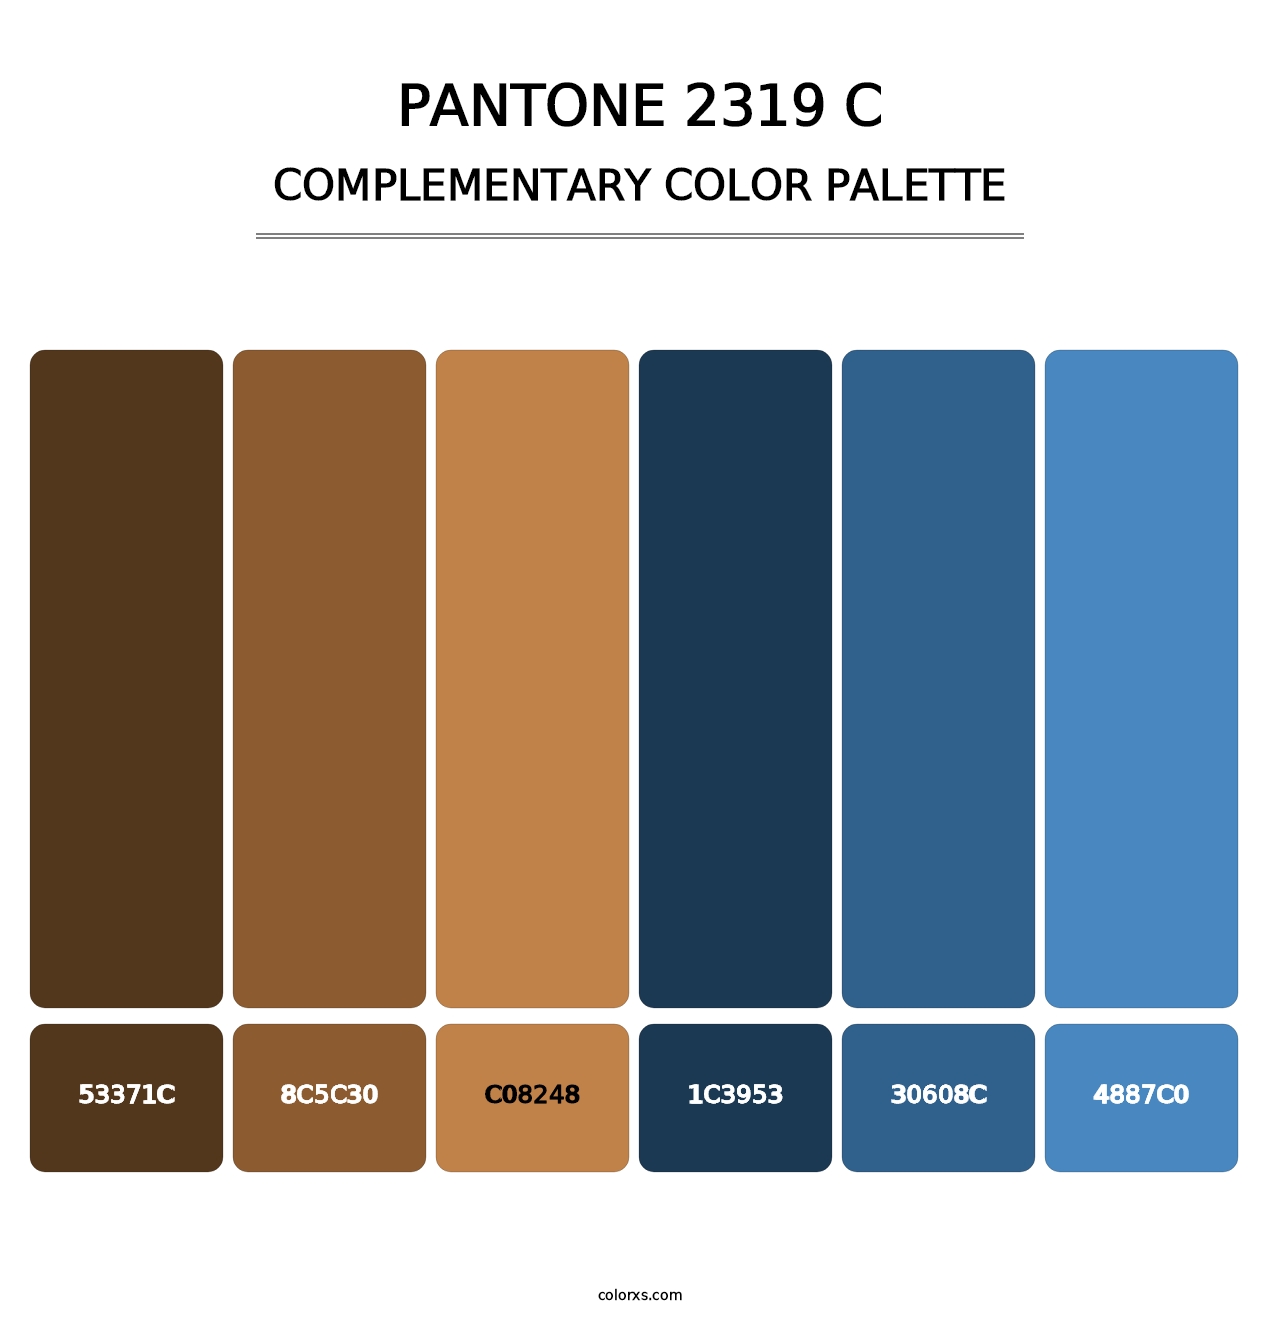 PANTONE 2319 C - Complementary Color Palette